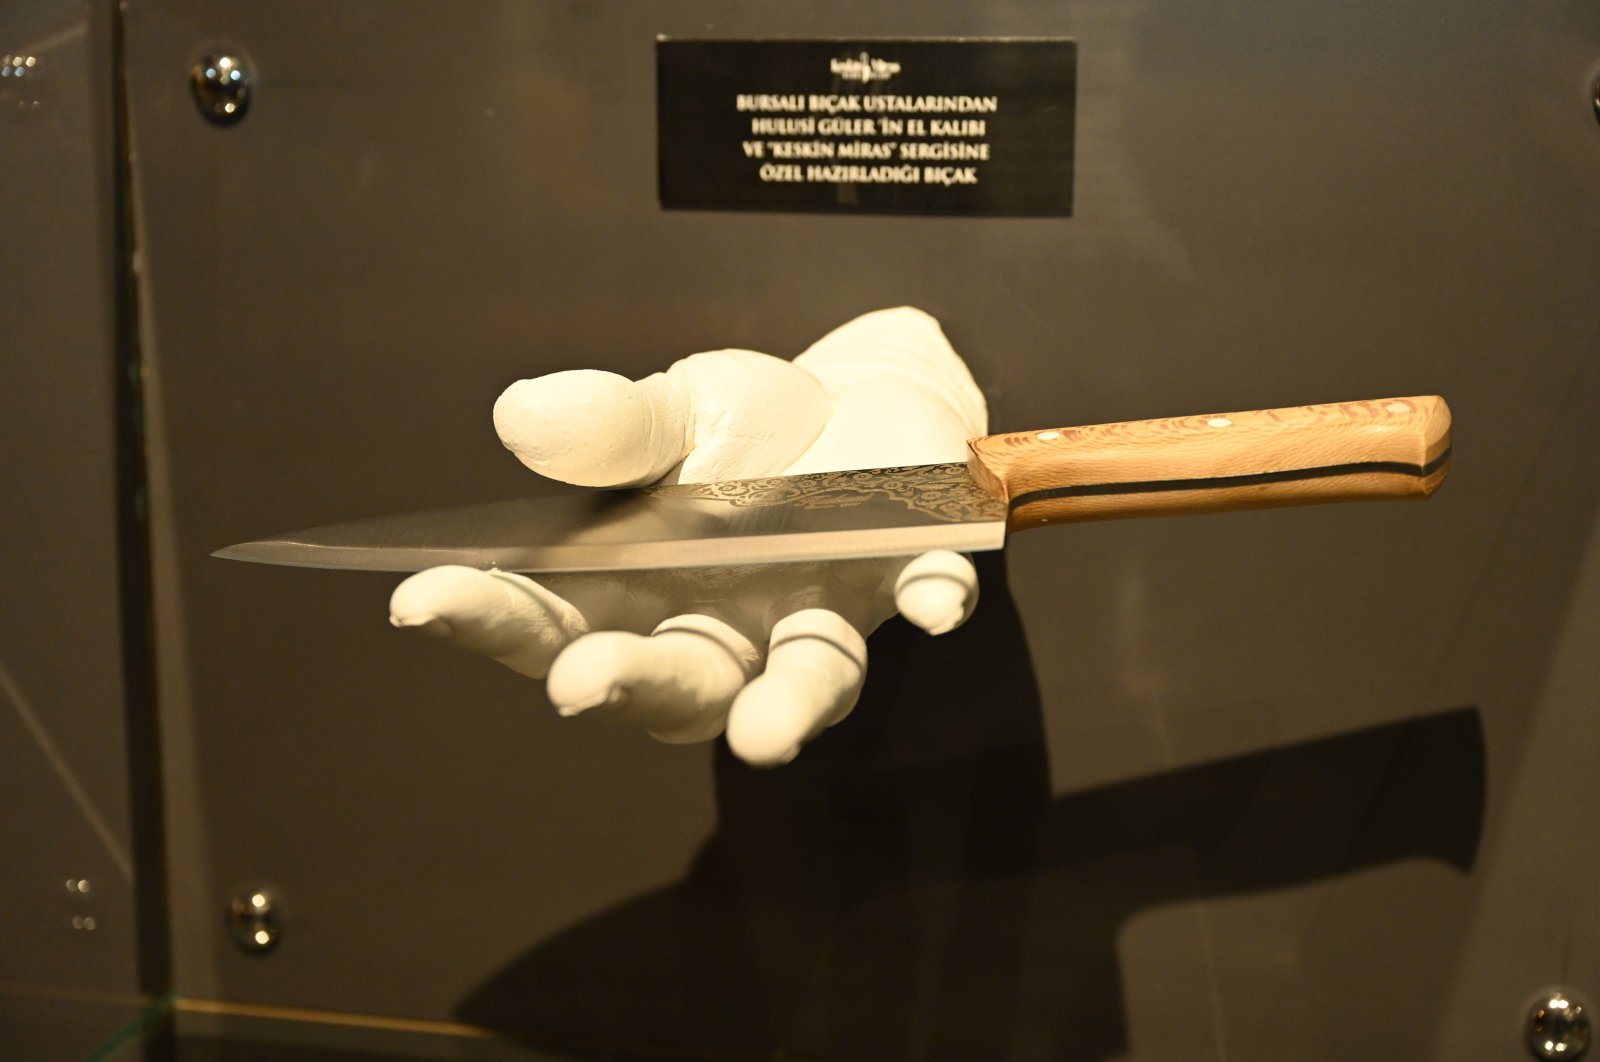 One of the traditional knives displayed in the exhibition, Bursa, Türkiye, May 11, 2023. (Photo courtesy of Bursa Municipality)